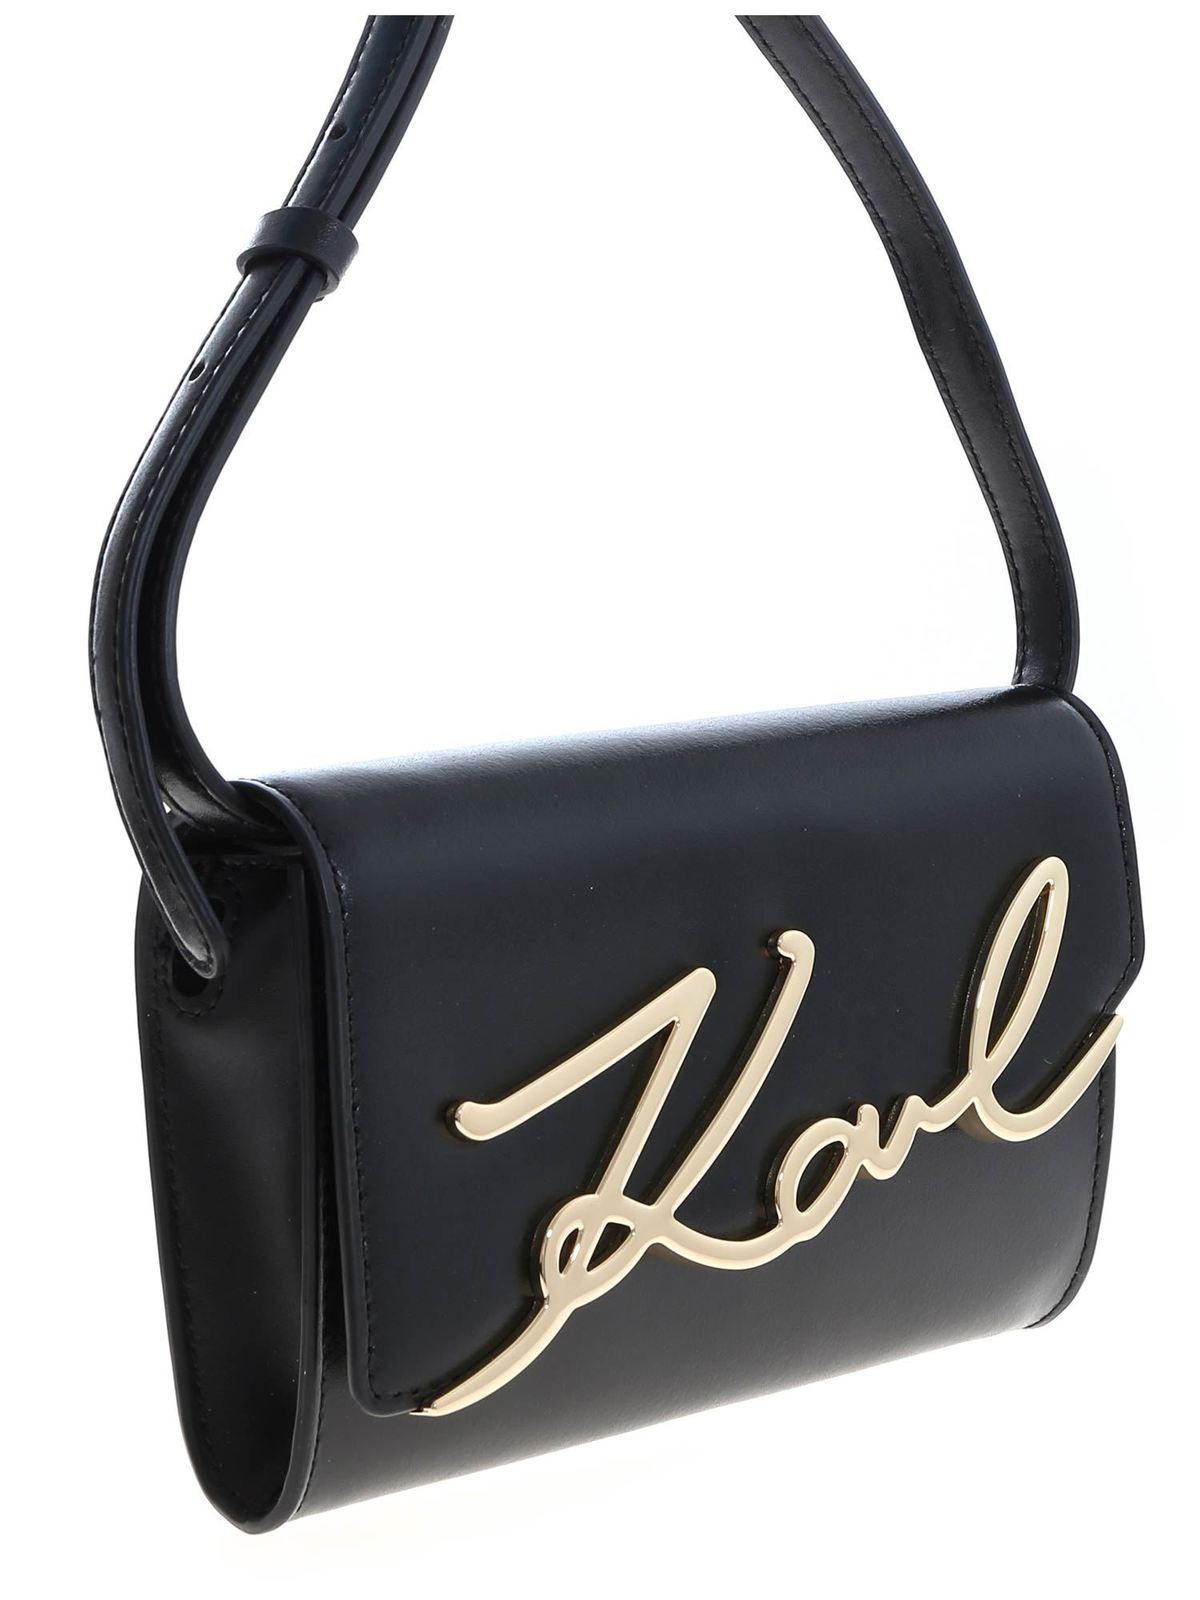 Karl Lagerfeld K Signature Belt Bag in Black